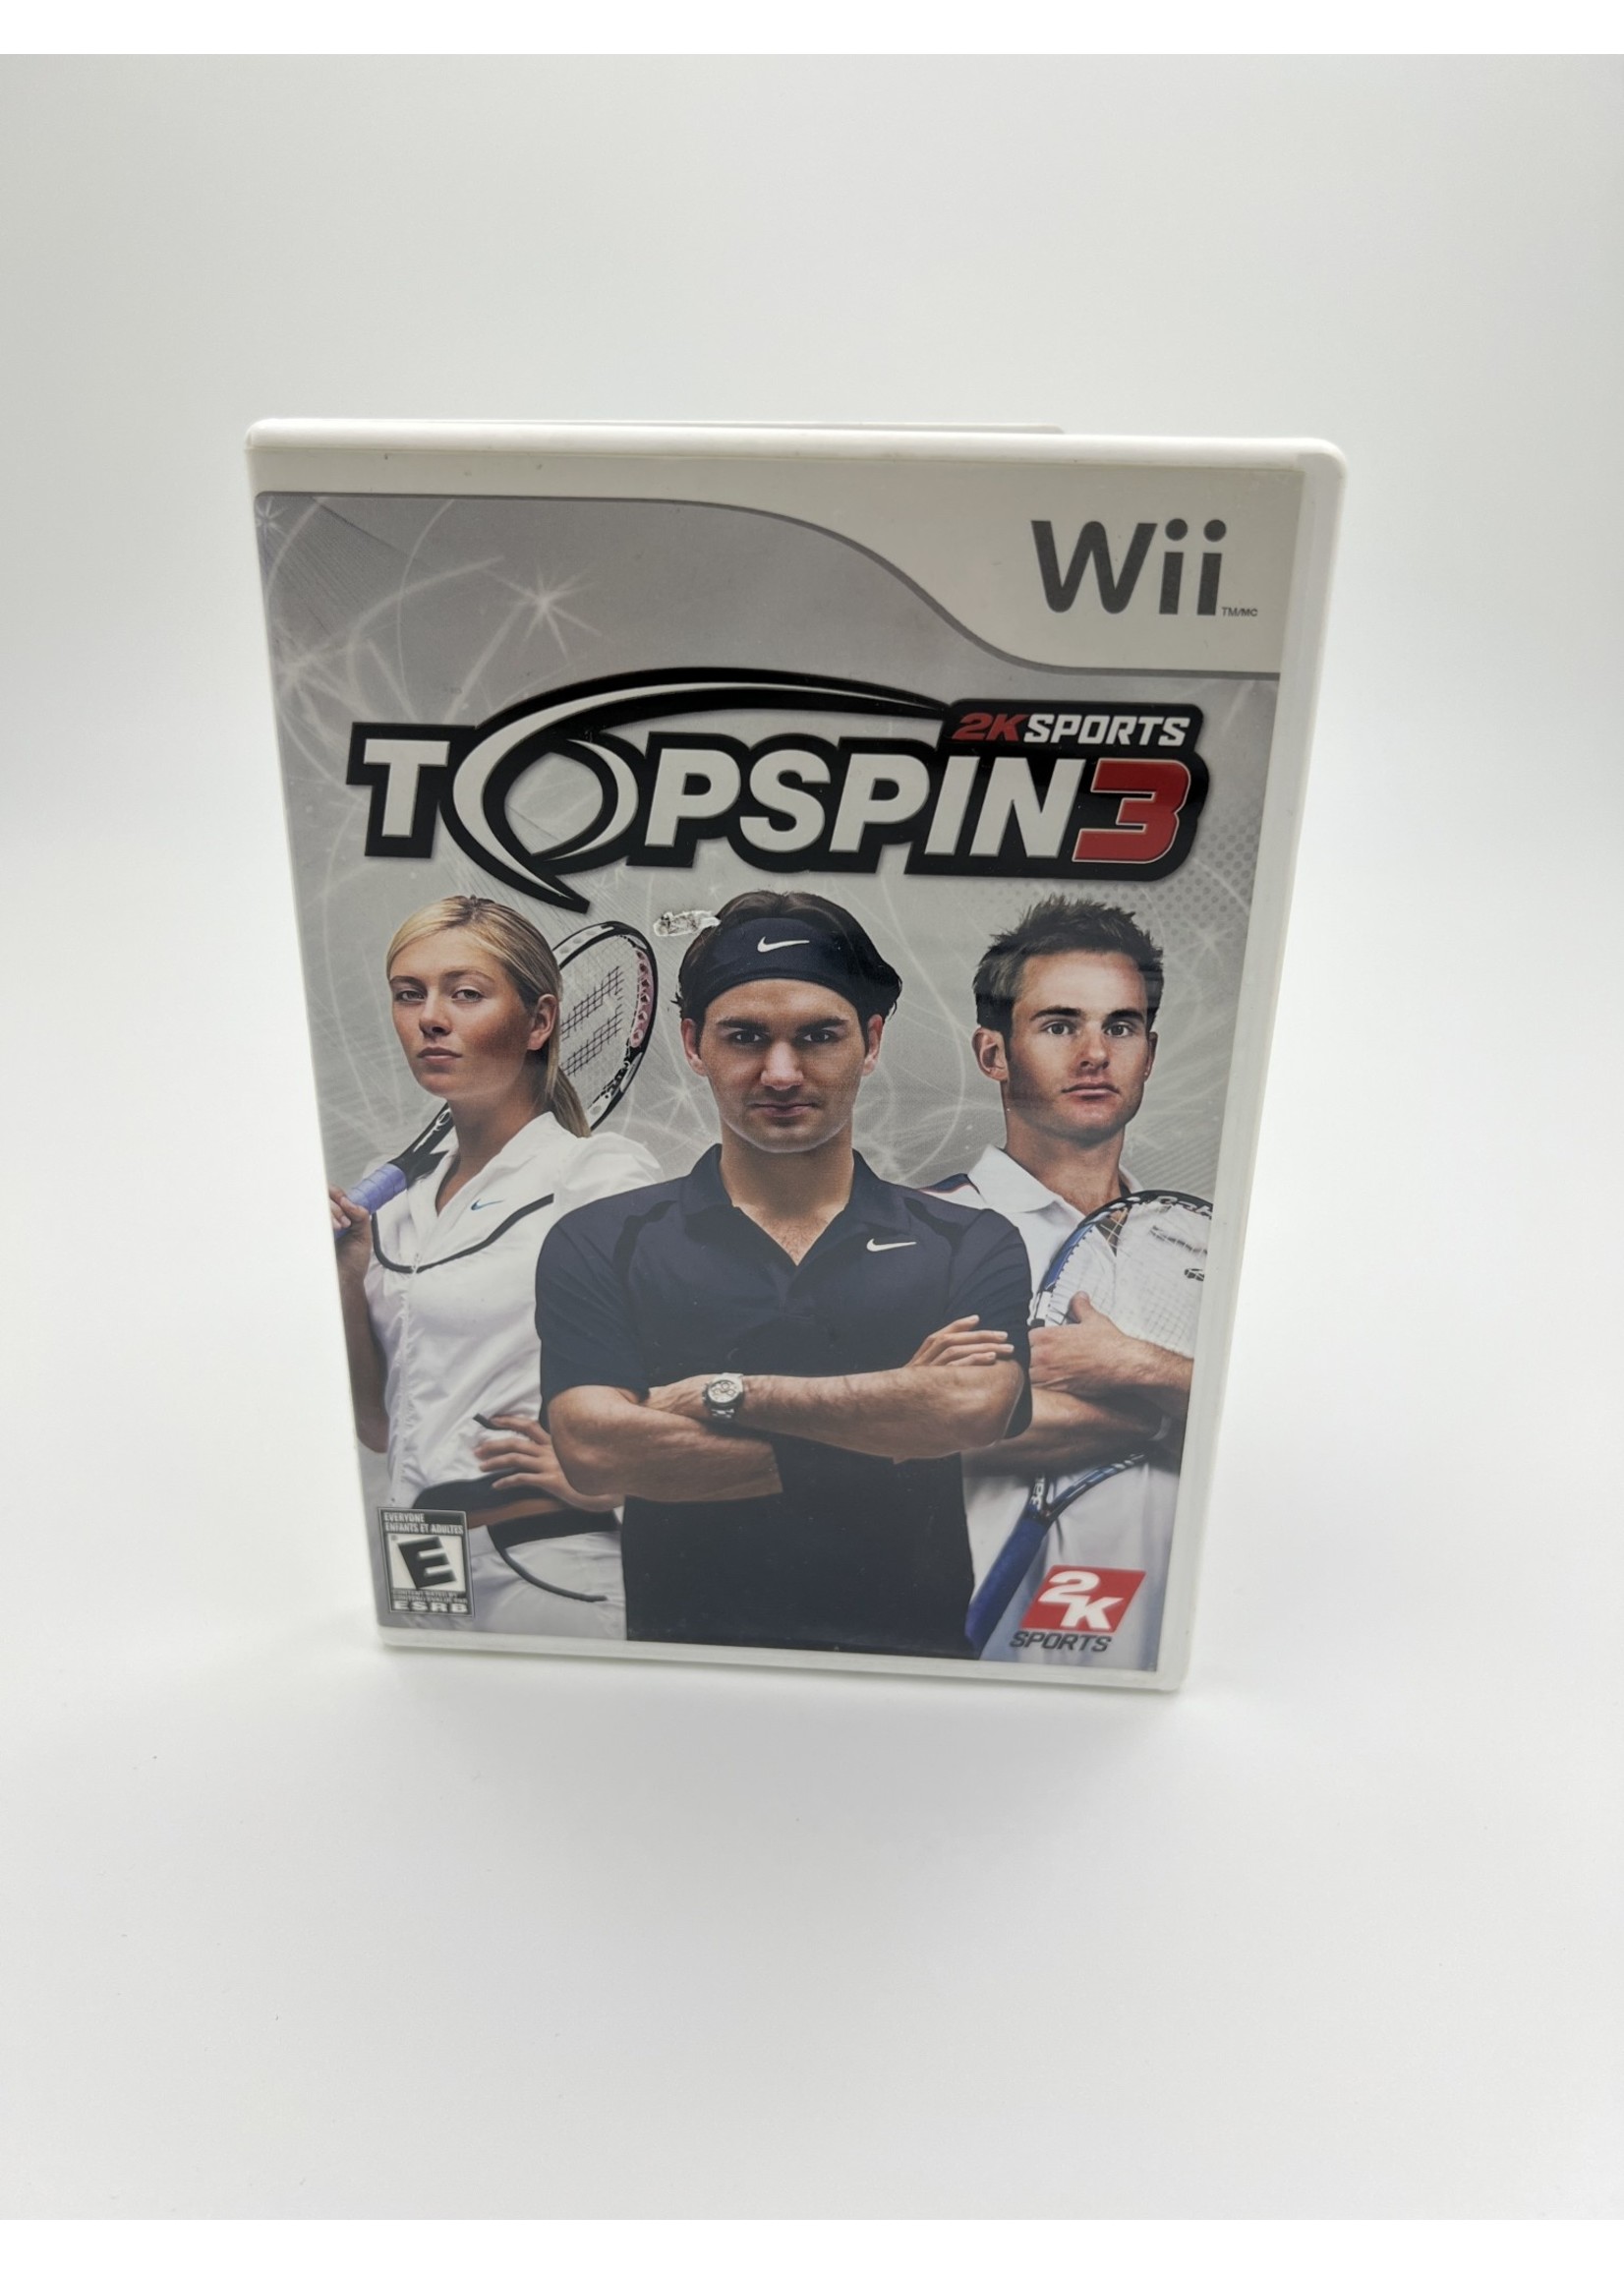 Nintendo Topspin 3 Wii